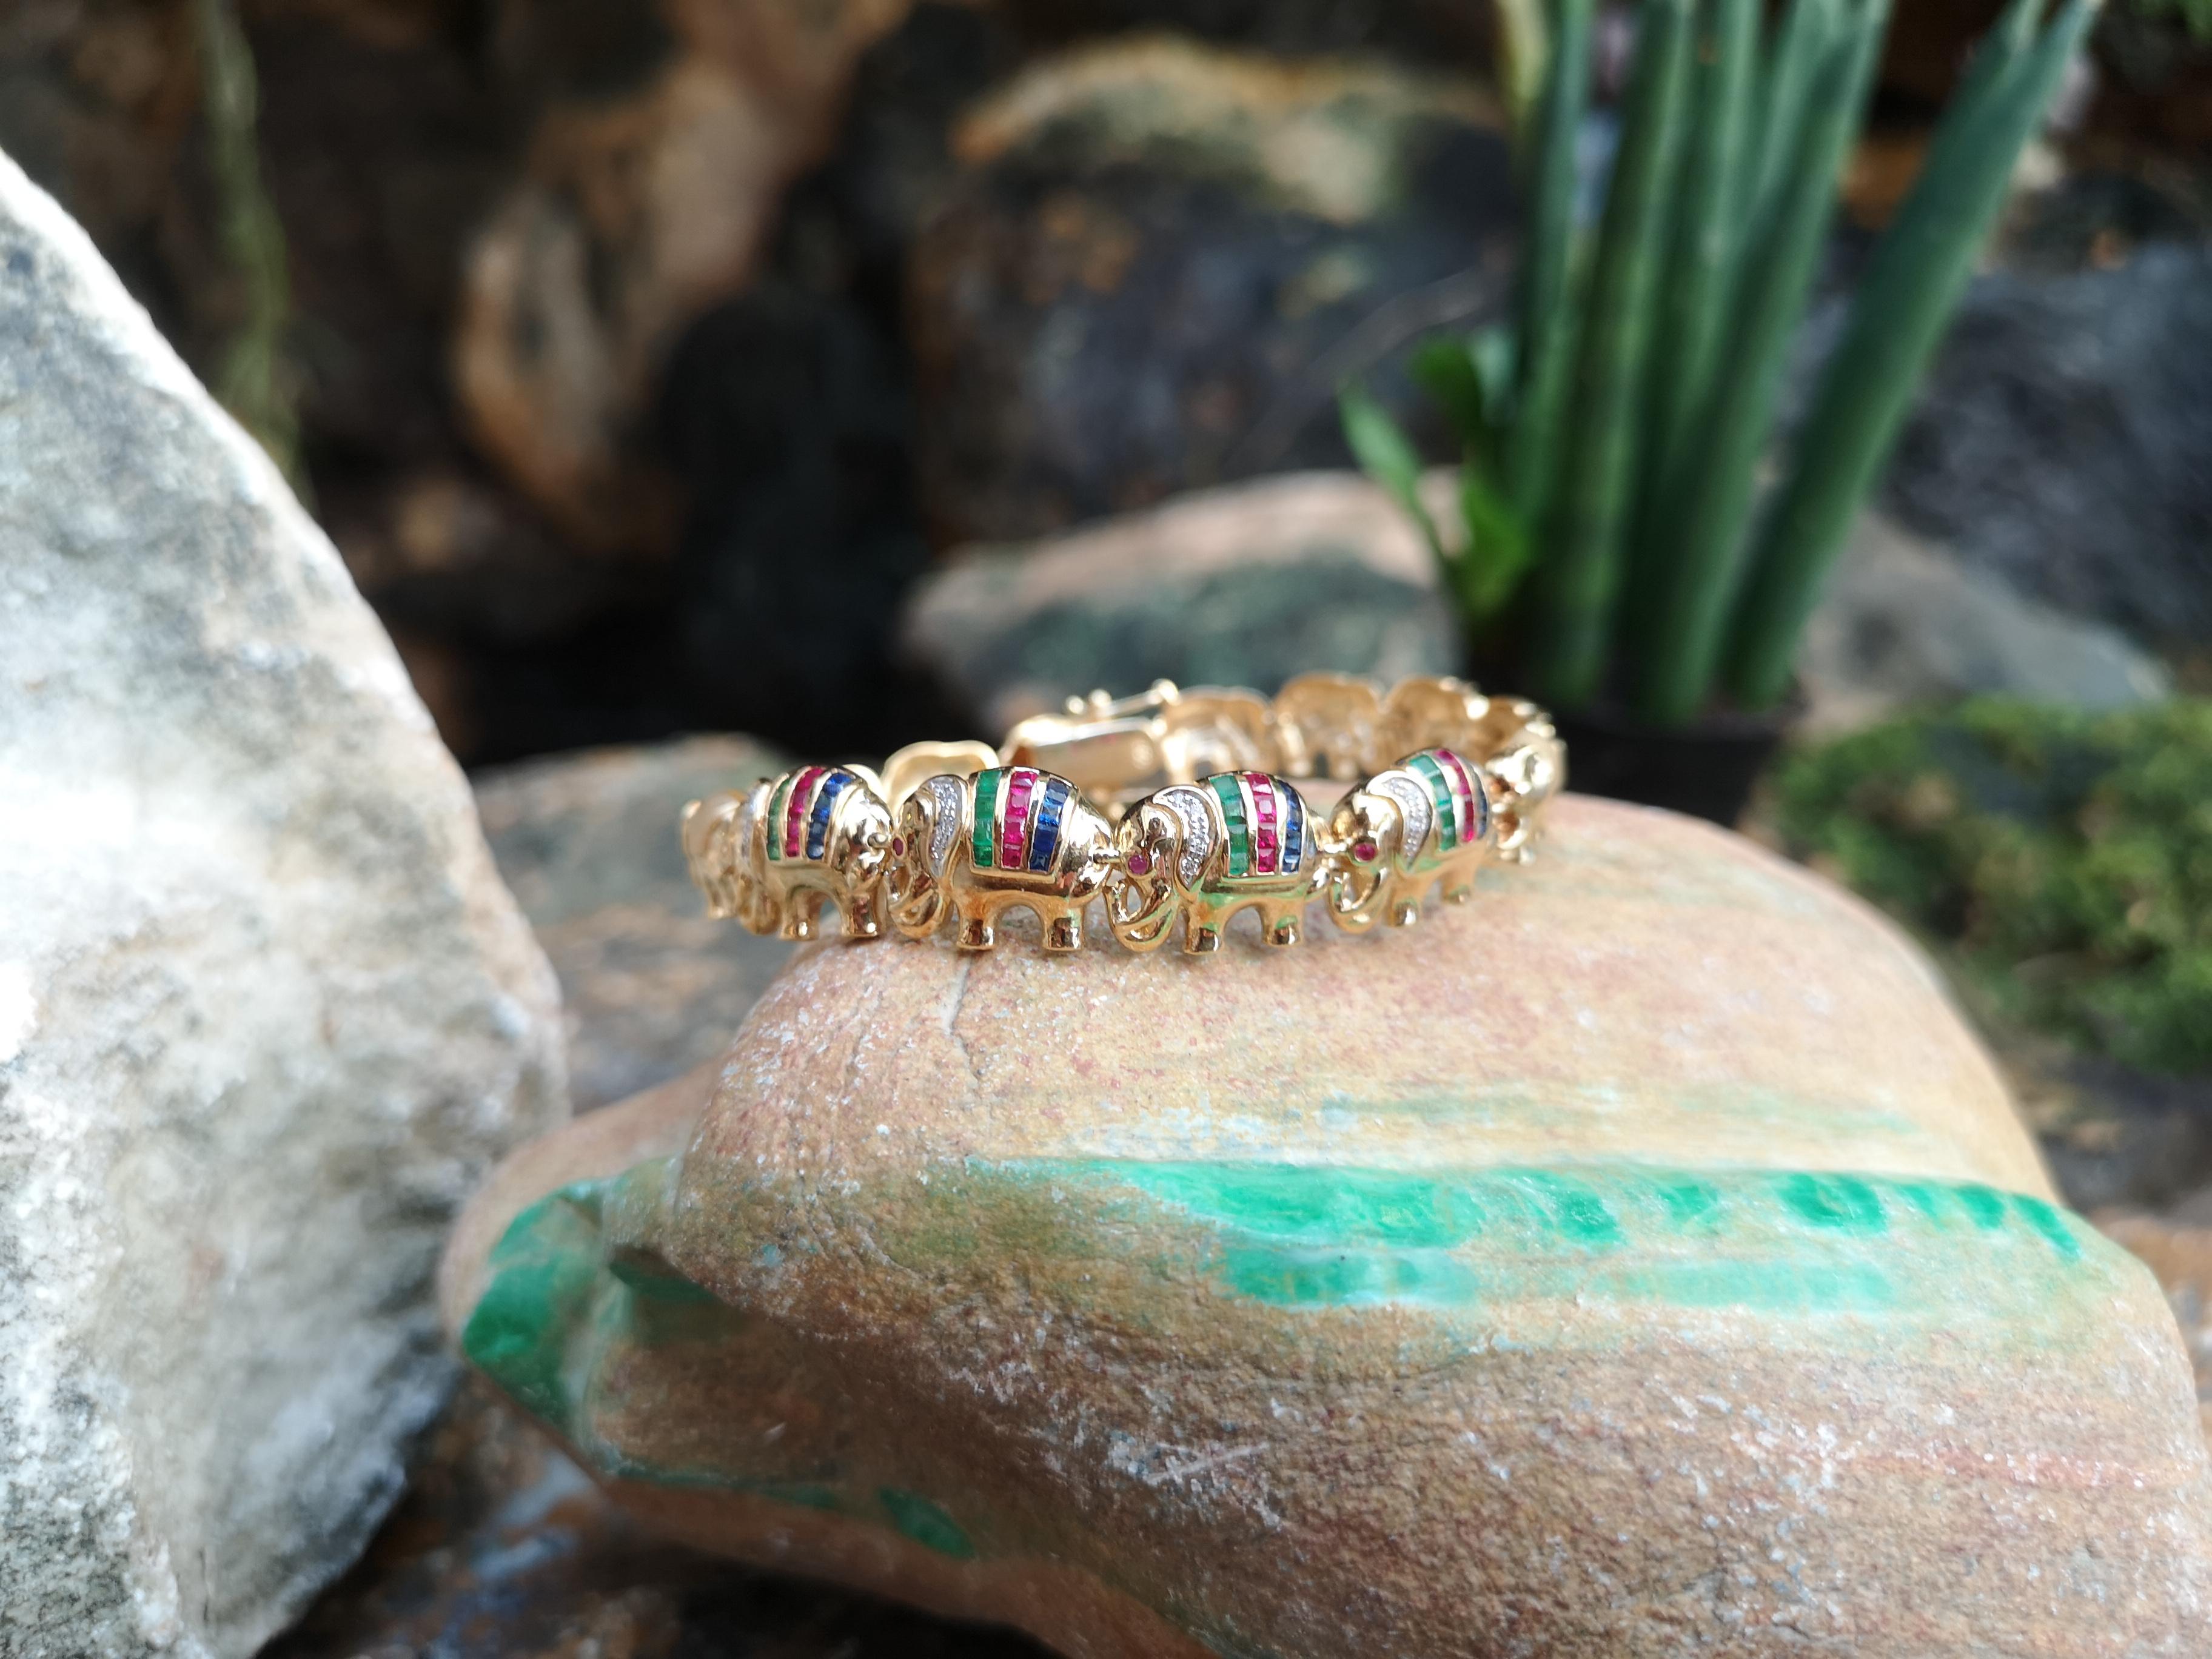 Ruby, Emerald, Blue Sapphire 1.75 carats with Diamond 0.08 carat Bracelet set in 18 Karat Gold Settings

Width: 1.2 cm
Length: 18.0 cm 

